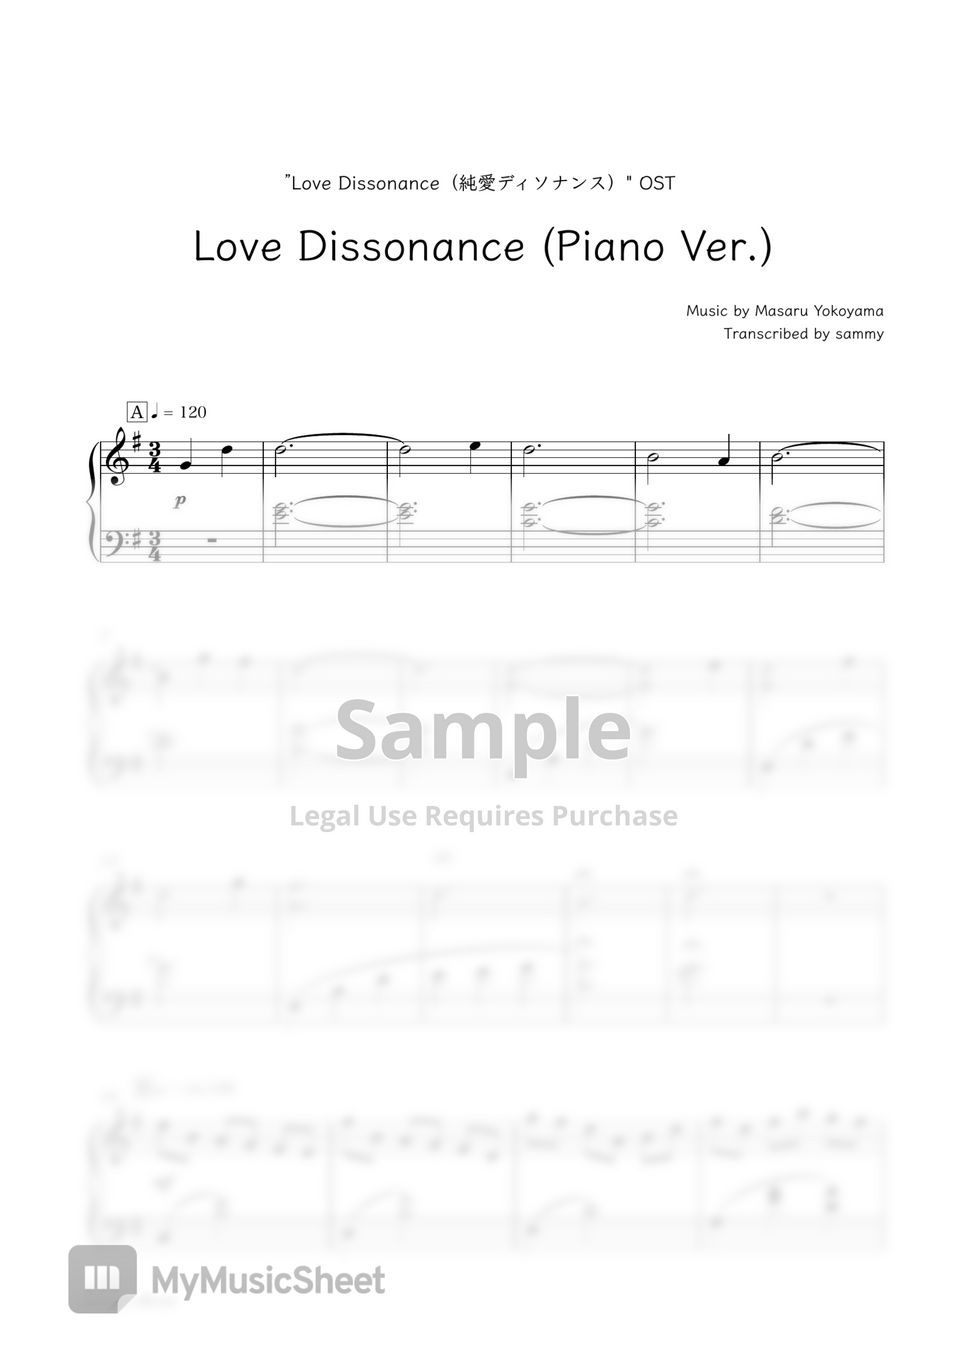 "Love Dissonance (純愛ディソナンス)"OST - Love Dissonance (Piano Ver.) by sammy